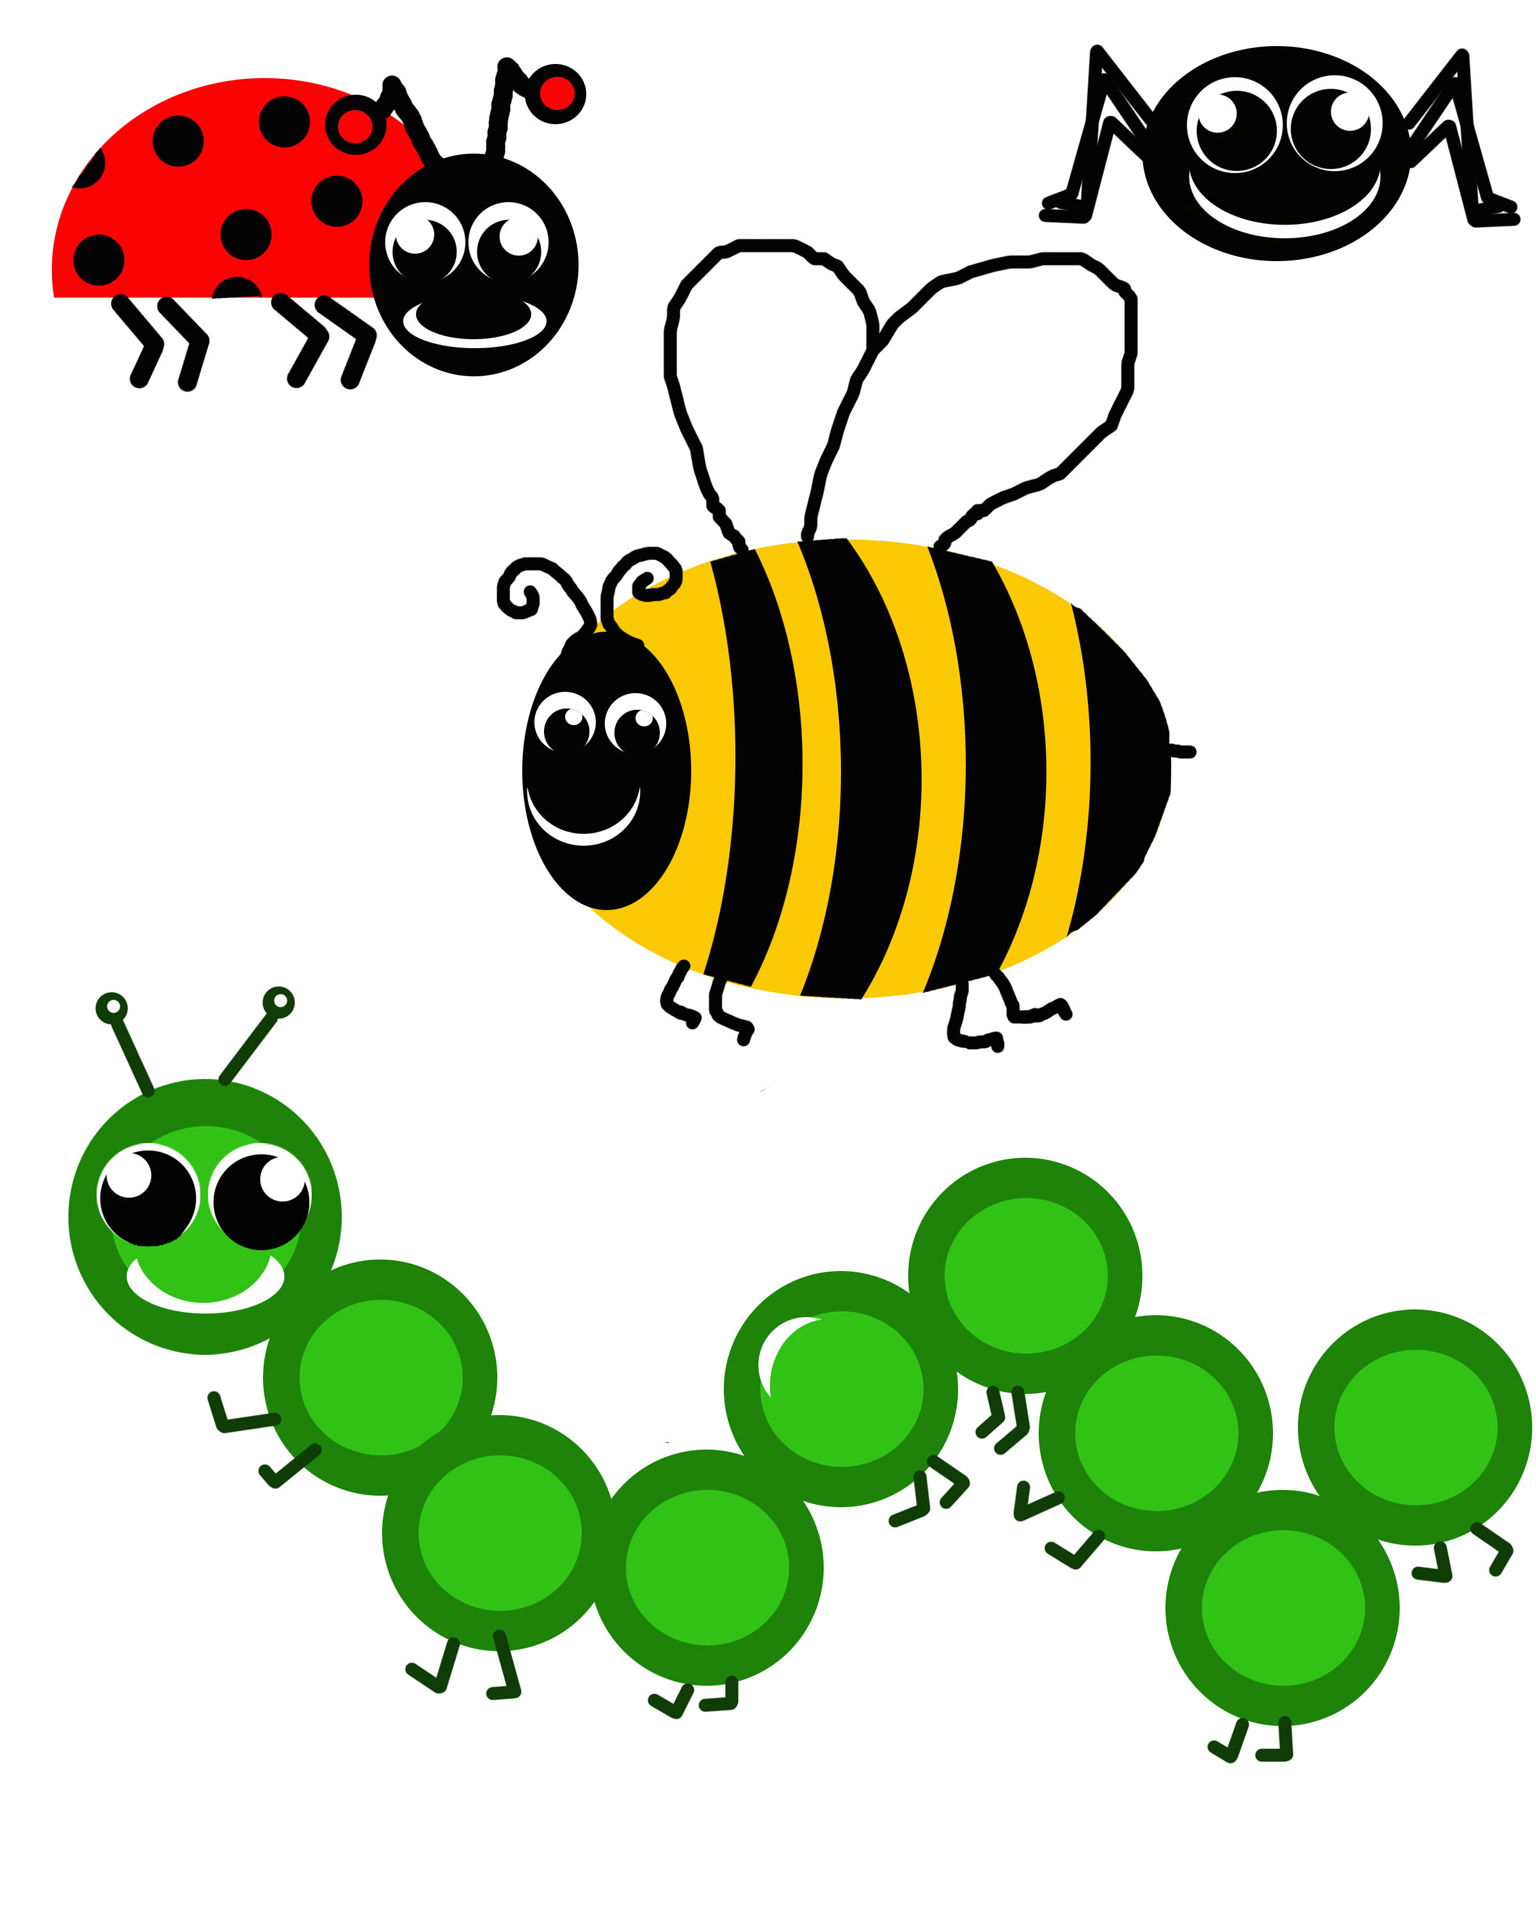 Beetle clip art was made digi